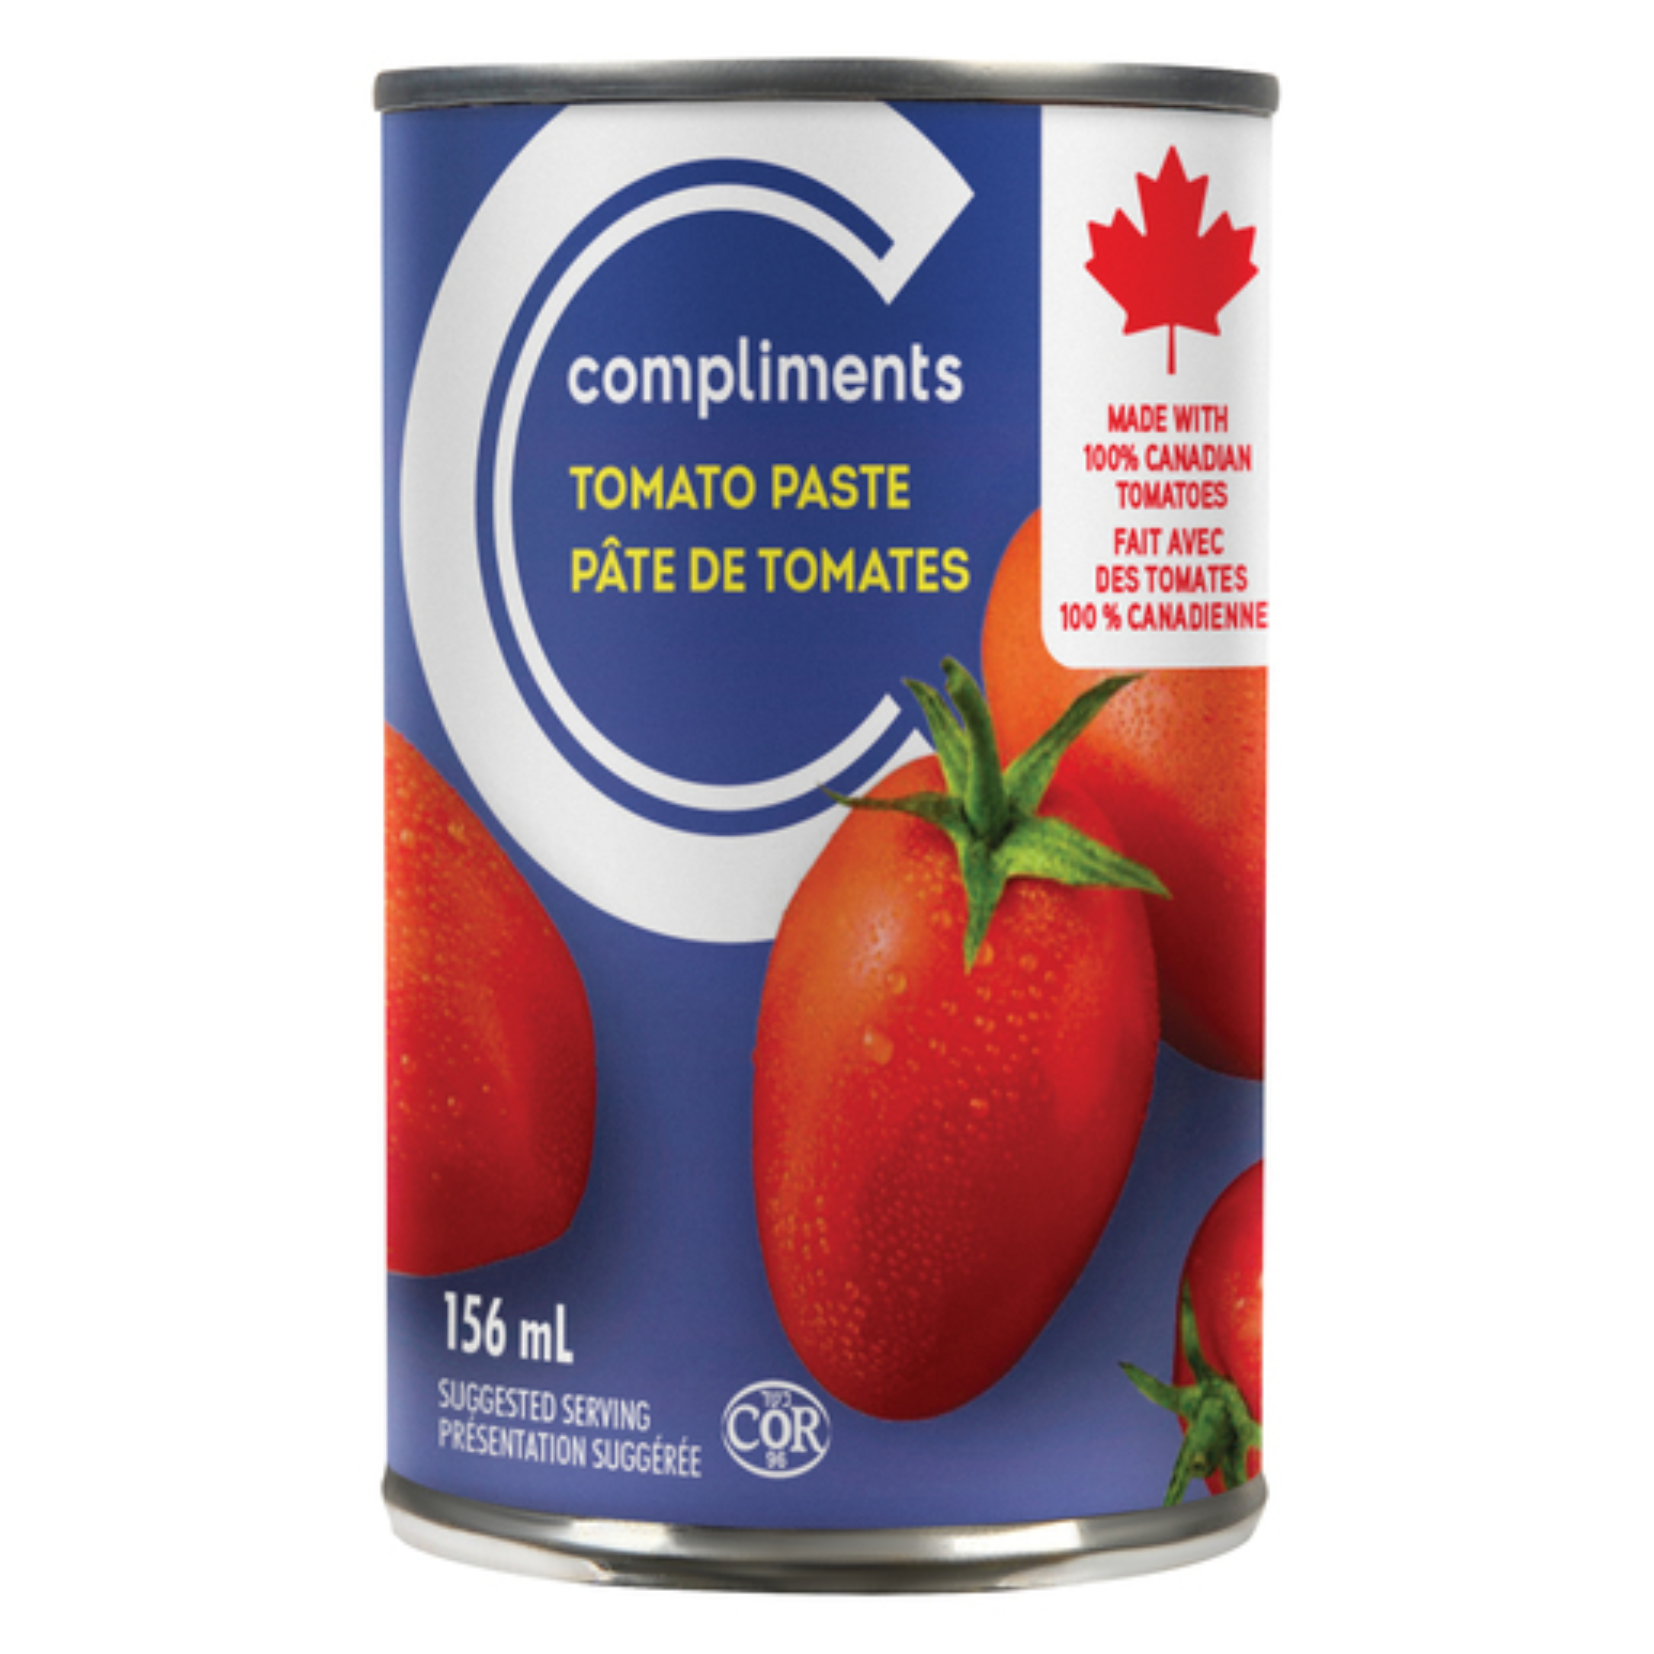 Compliments Tomato Paste 156ml